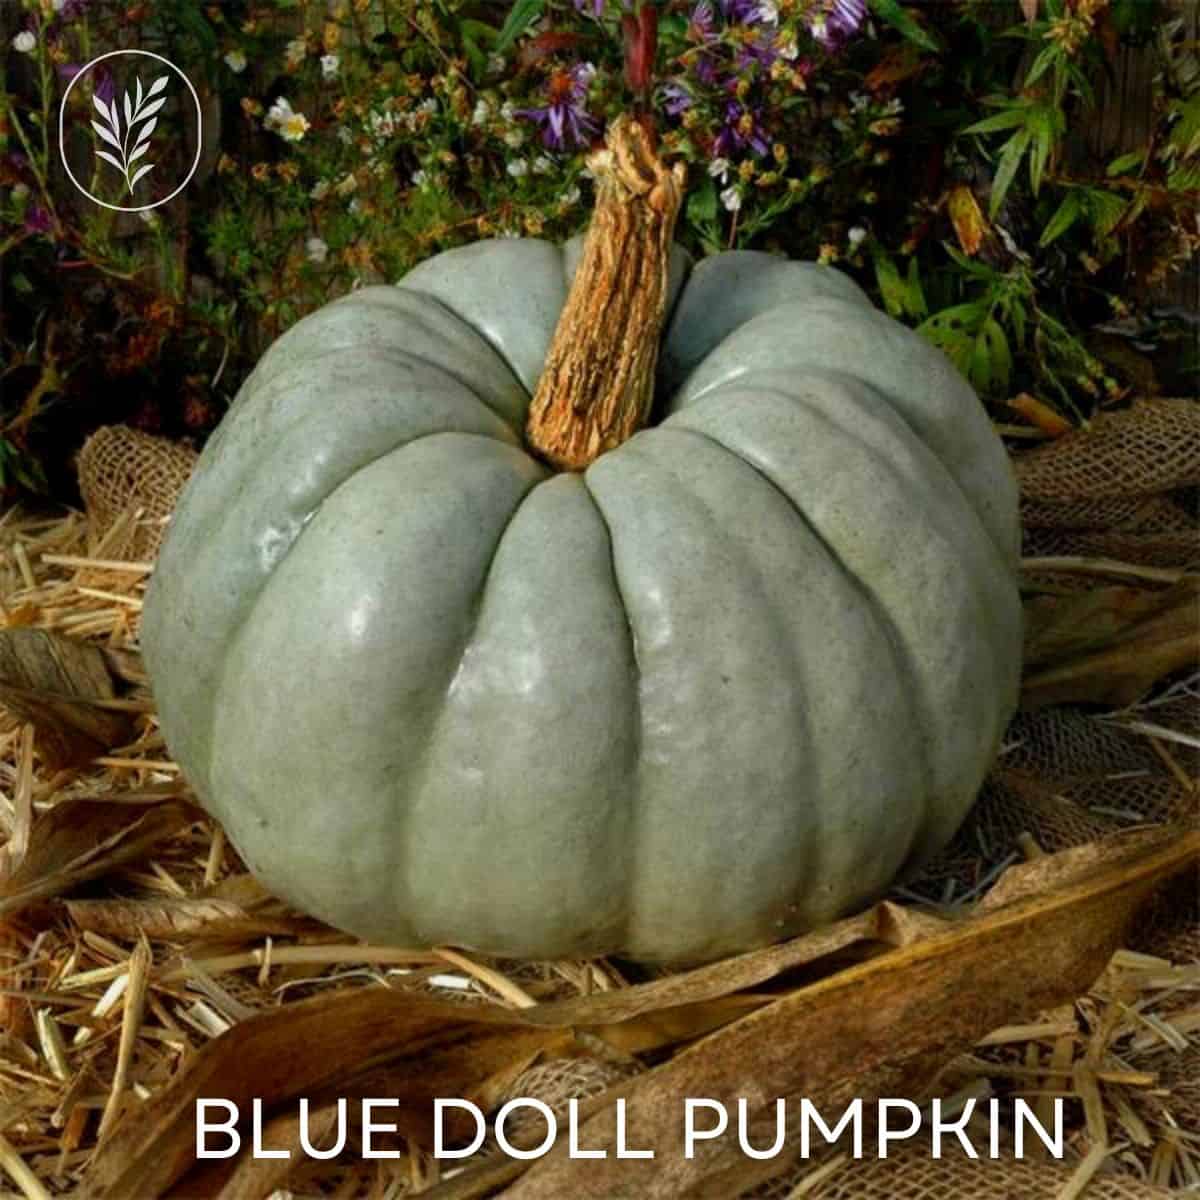 Blue doll pumpkin via @home4theharvest